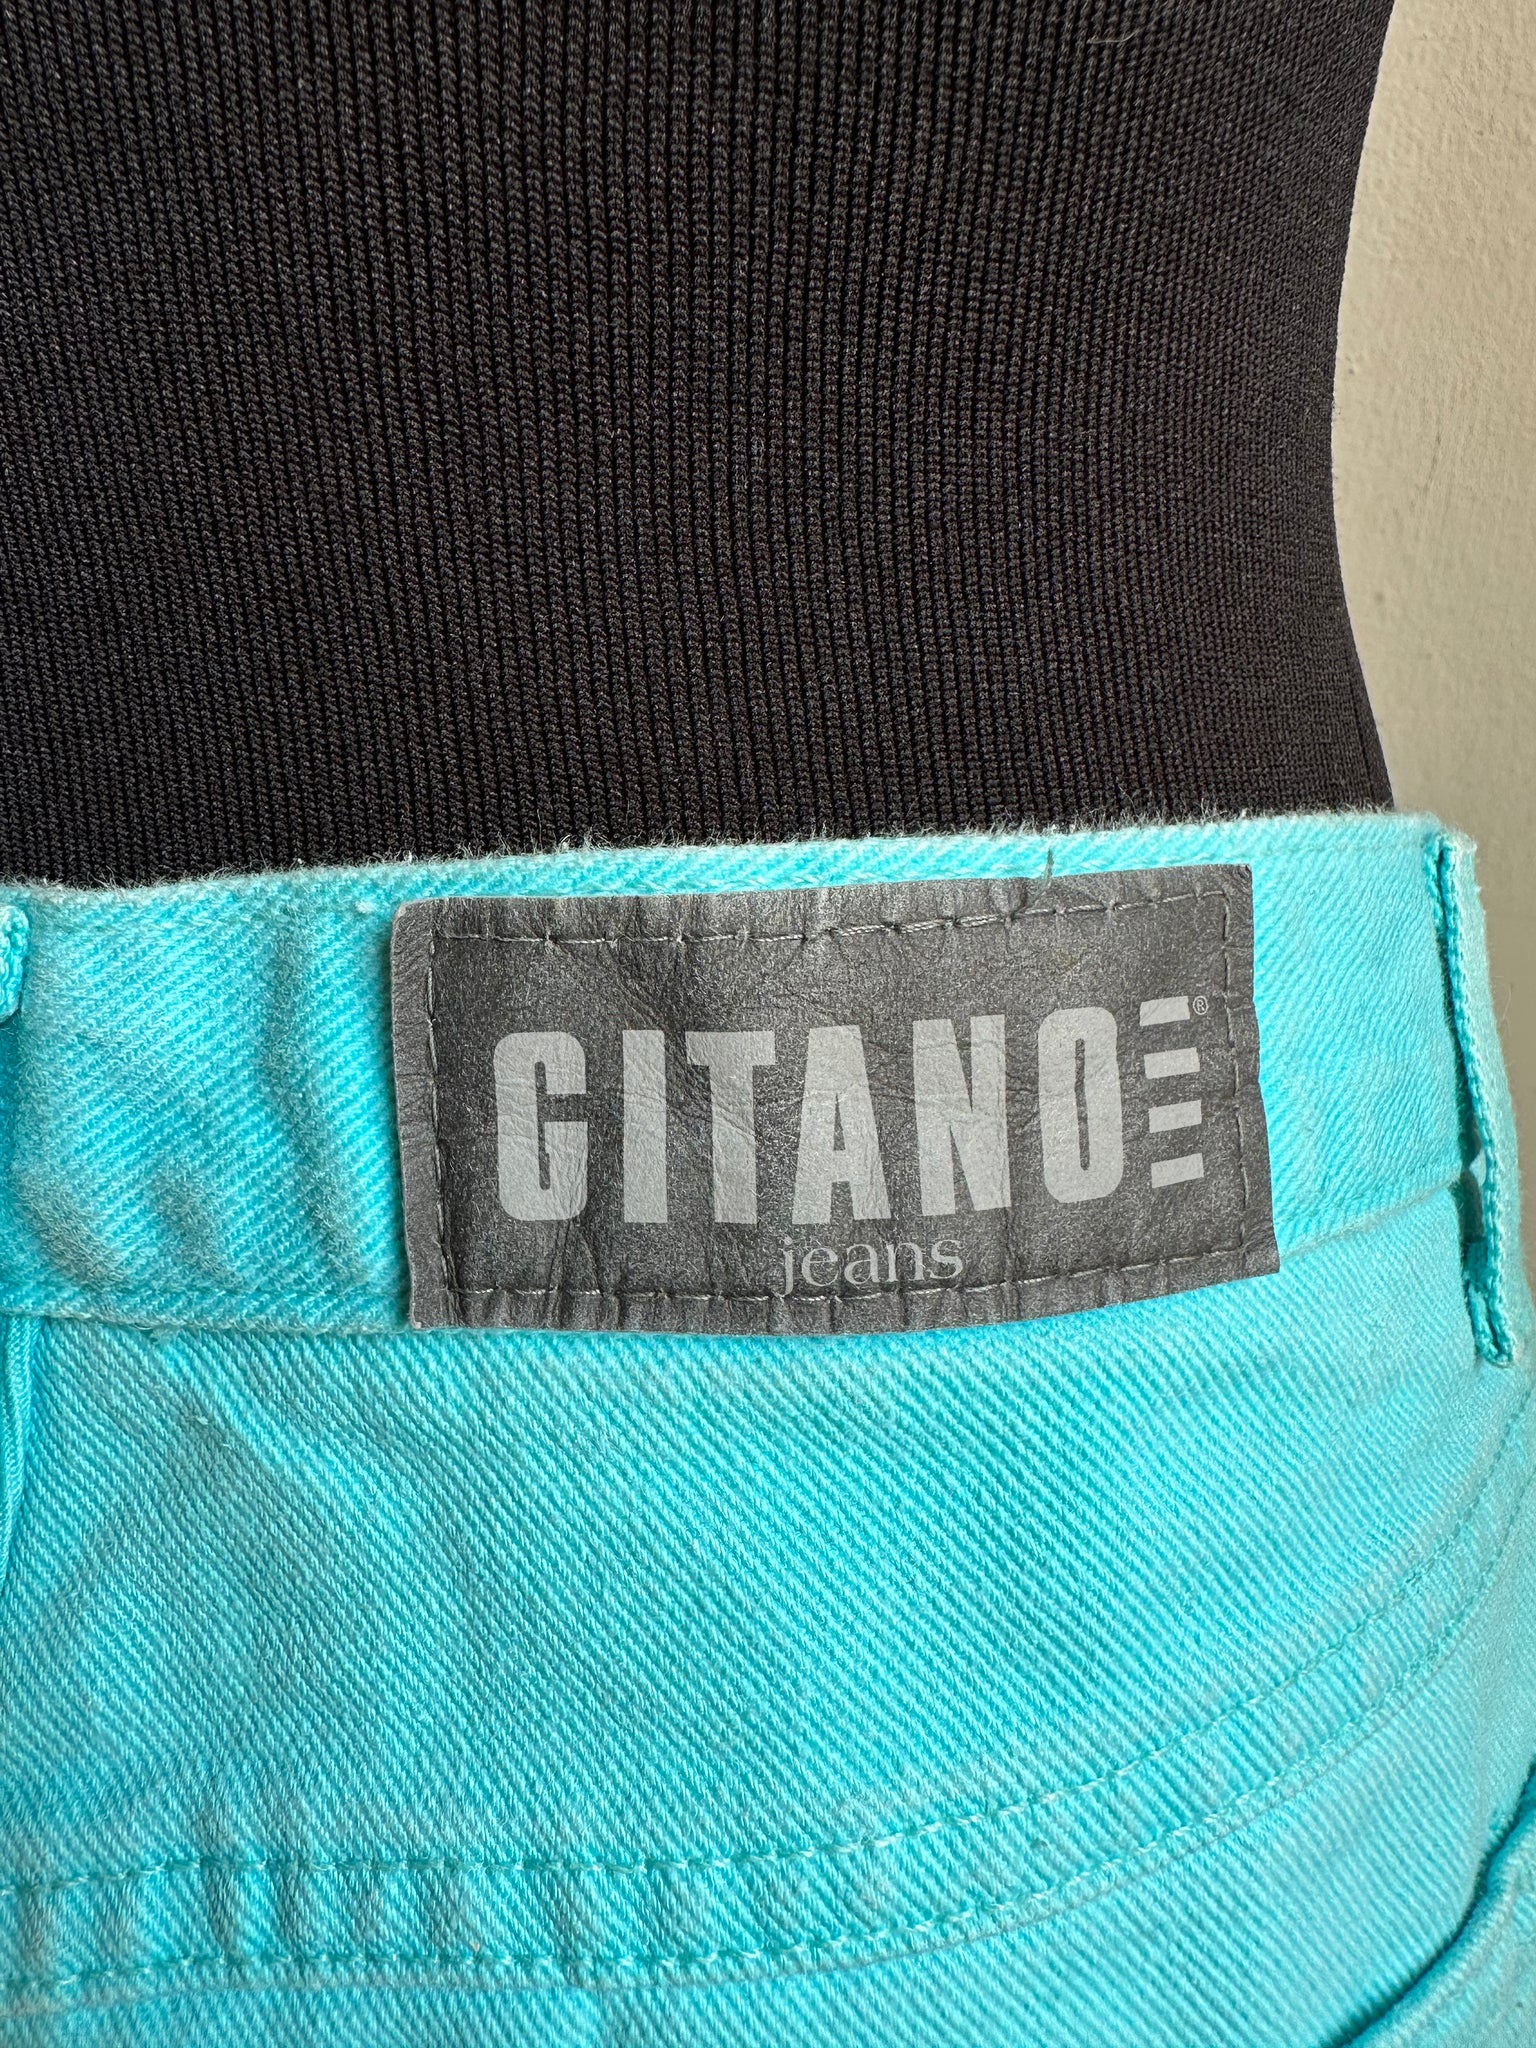 Vintage Sky Blue Gitano Jeans